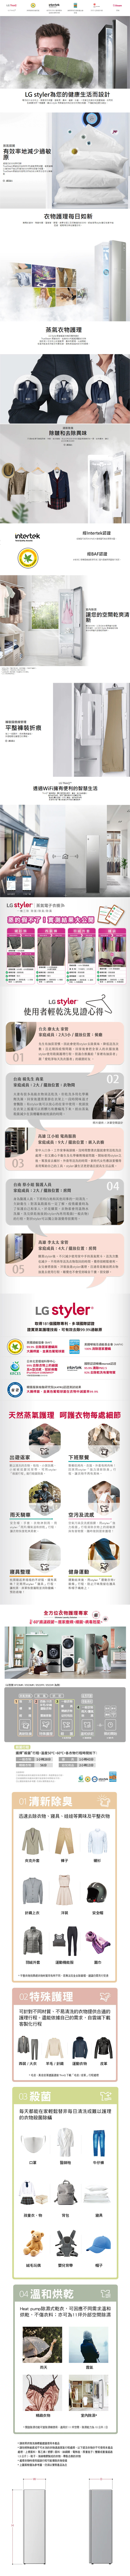 LG E523MR 電子衣櫥 Styler 奢華鏡面款 Styler蒸氣輕乾衣